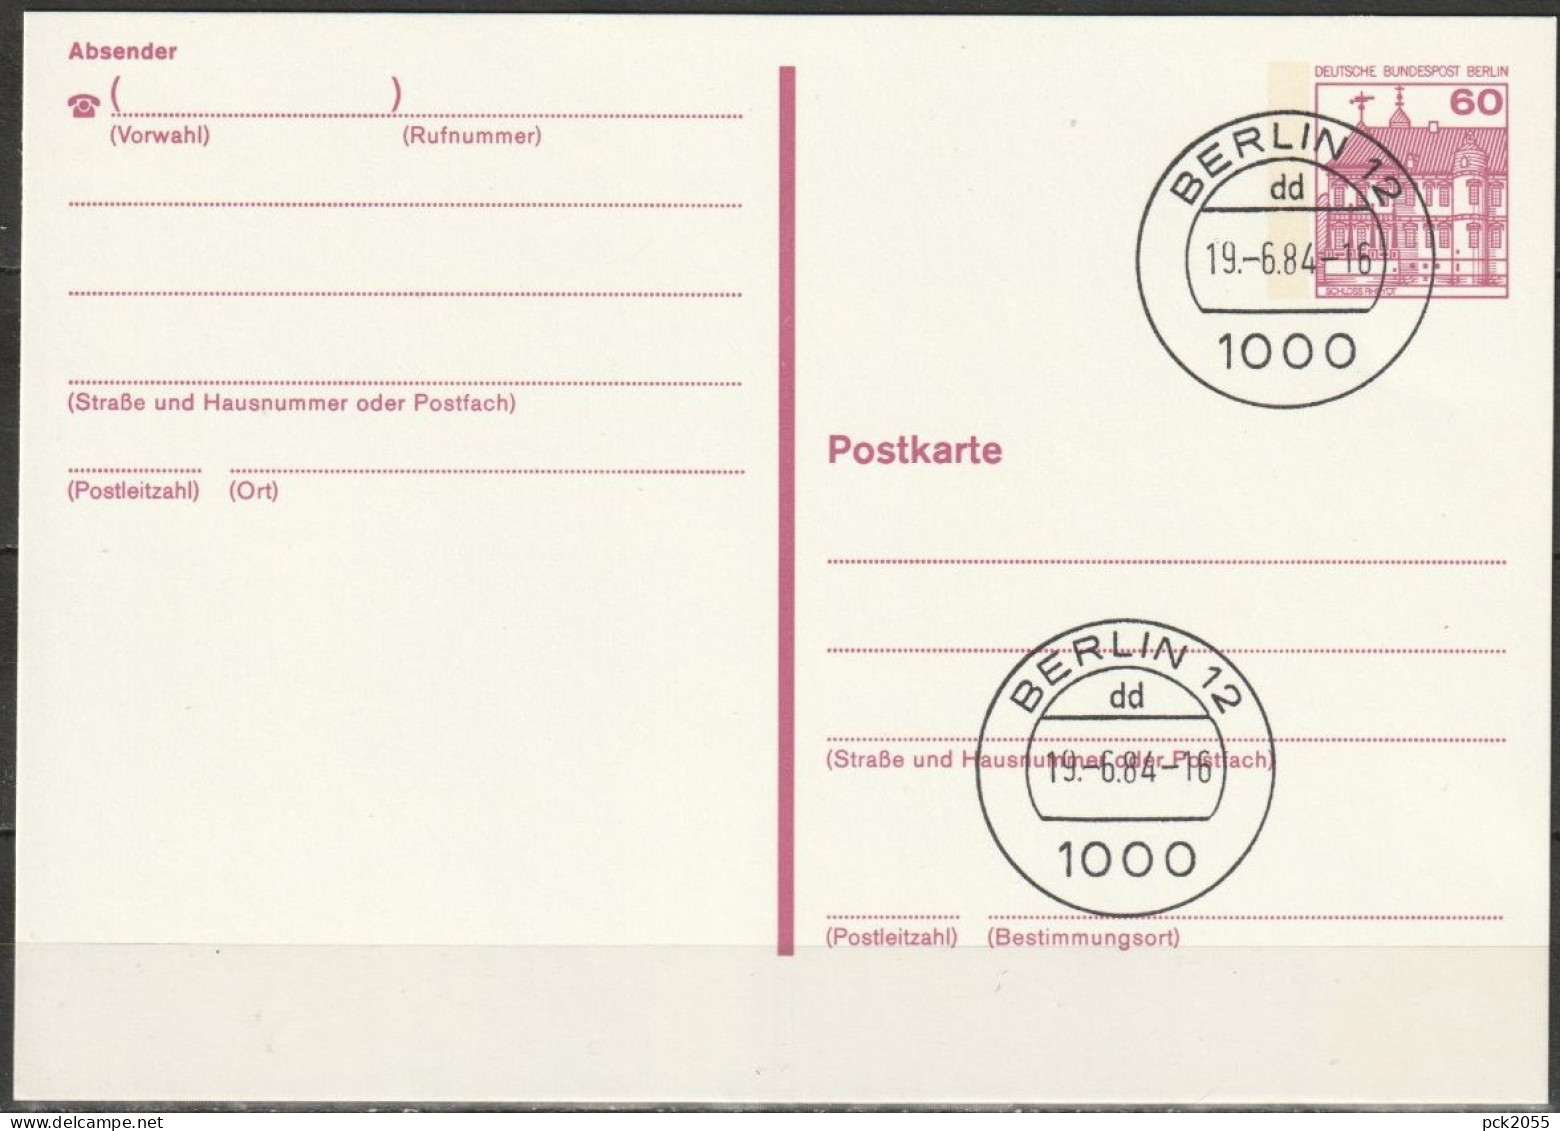 Berlin Ganzsache 1984 Mi.-Nr. P122 II Tagesstempel BERLIN 12  19.6.84  ( PK 460 ) - Postkarten - Gebraucht